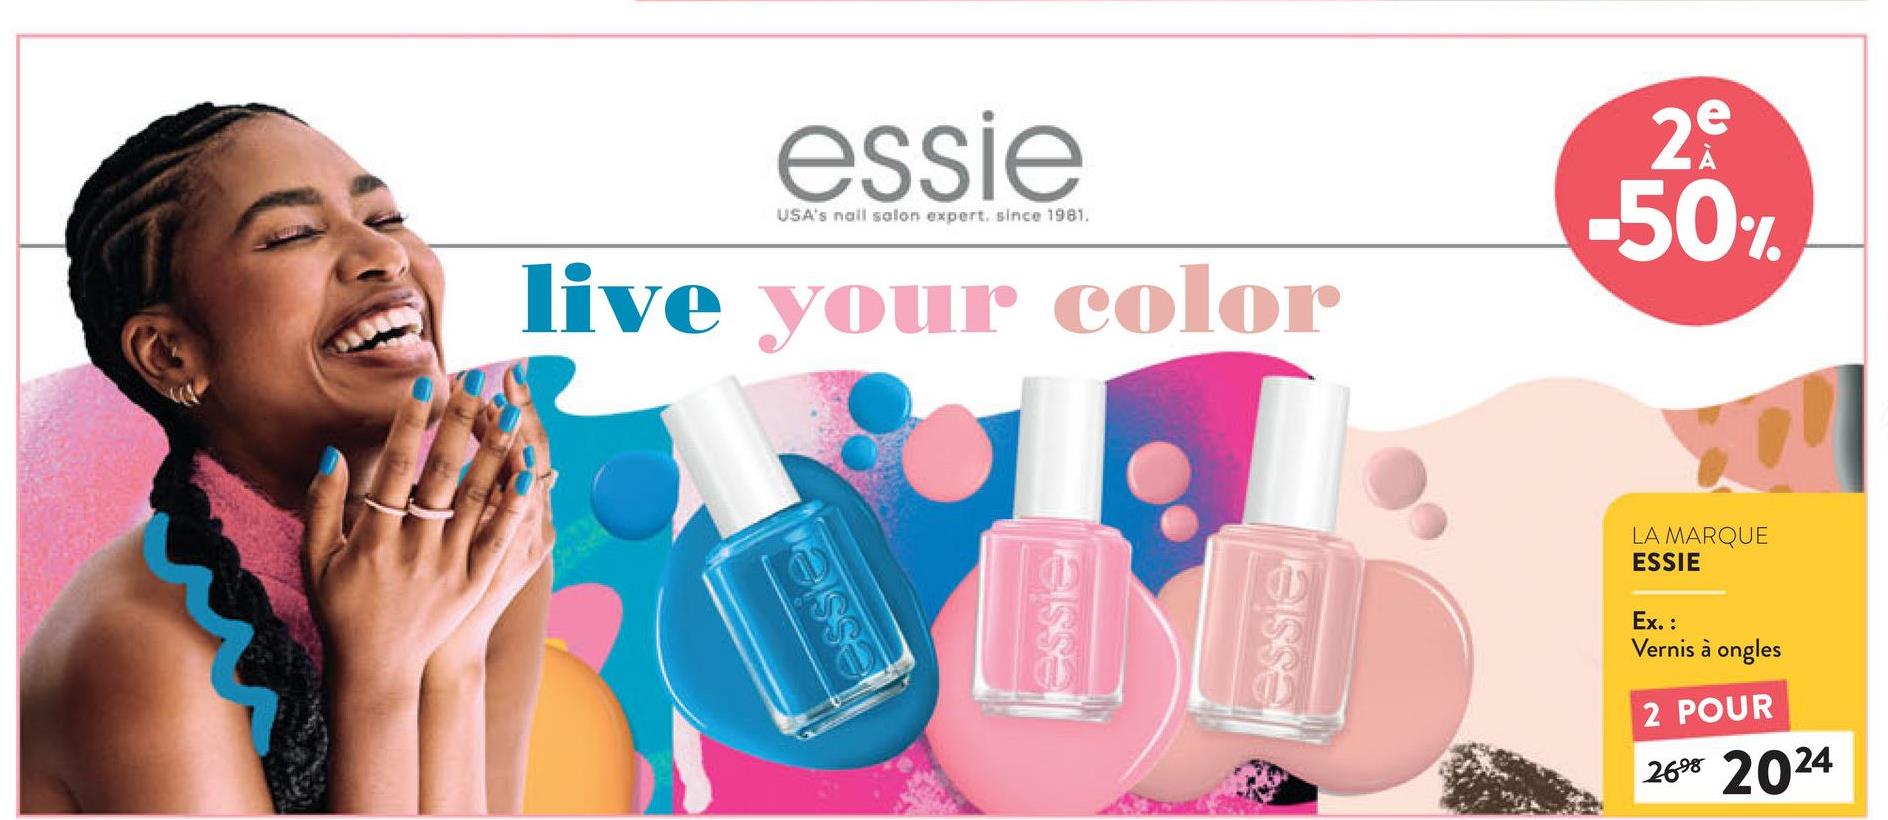 essier
essie
USA's nail salon expert. since 1981.
live your color
e
29
-50%
essie
essie
LA MARQUE
ESSIE
Ex.:
Vernis à ongles
2 POUR
2698 2024